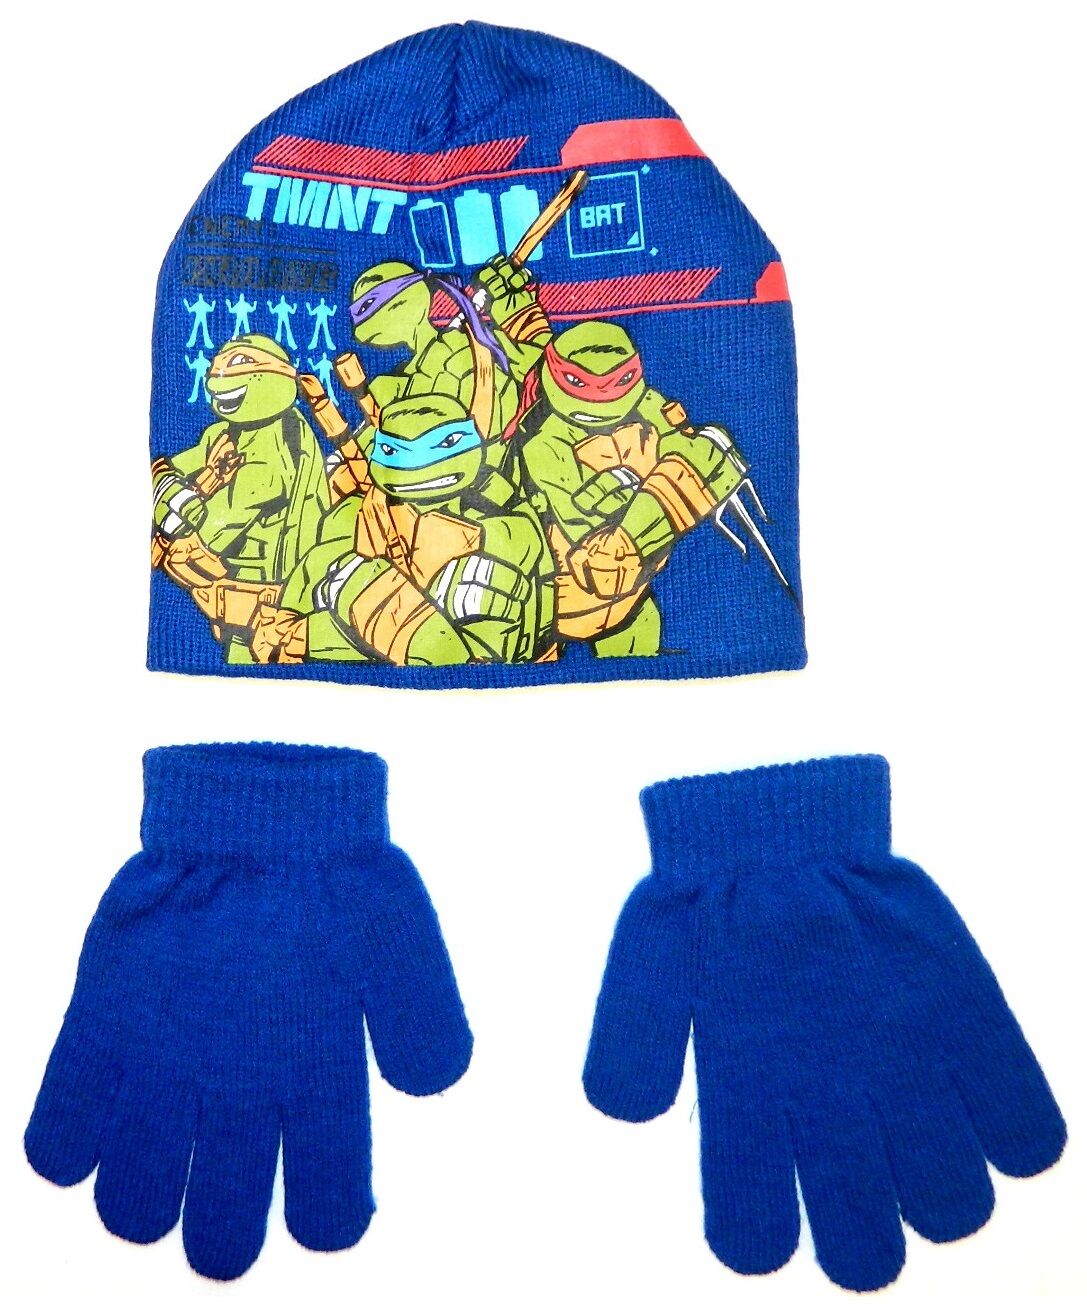 Teenage Mutant Ninja Turtle Blue Hat & Glove Set, Age 2-4 (52cm), Age 4-8 (54cm), 100% Acrylic, Official Merchandise